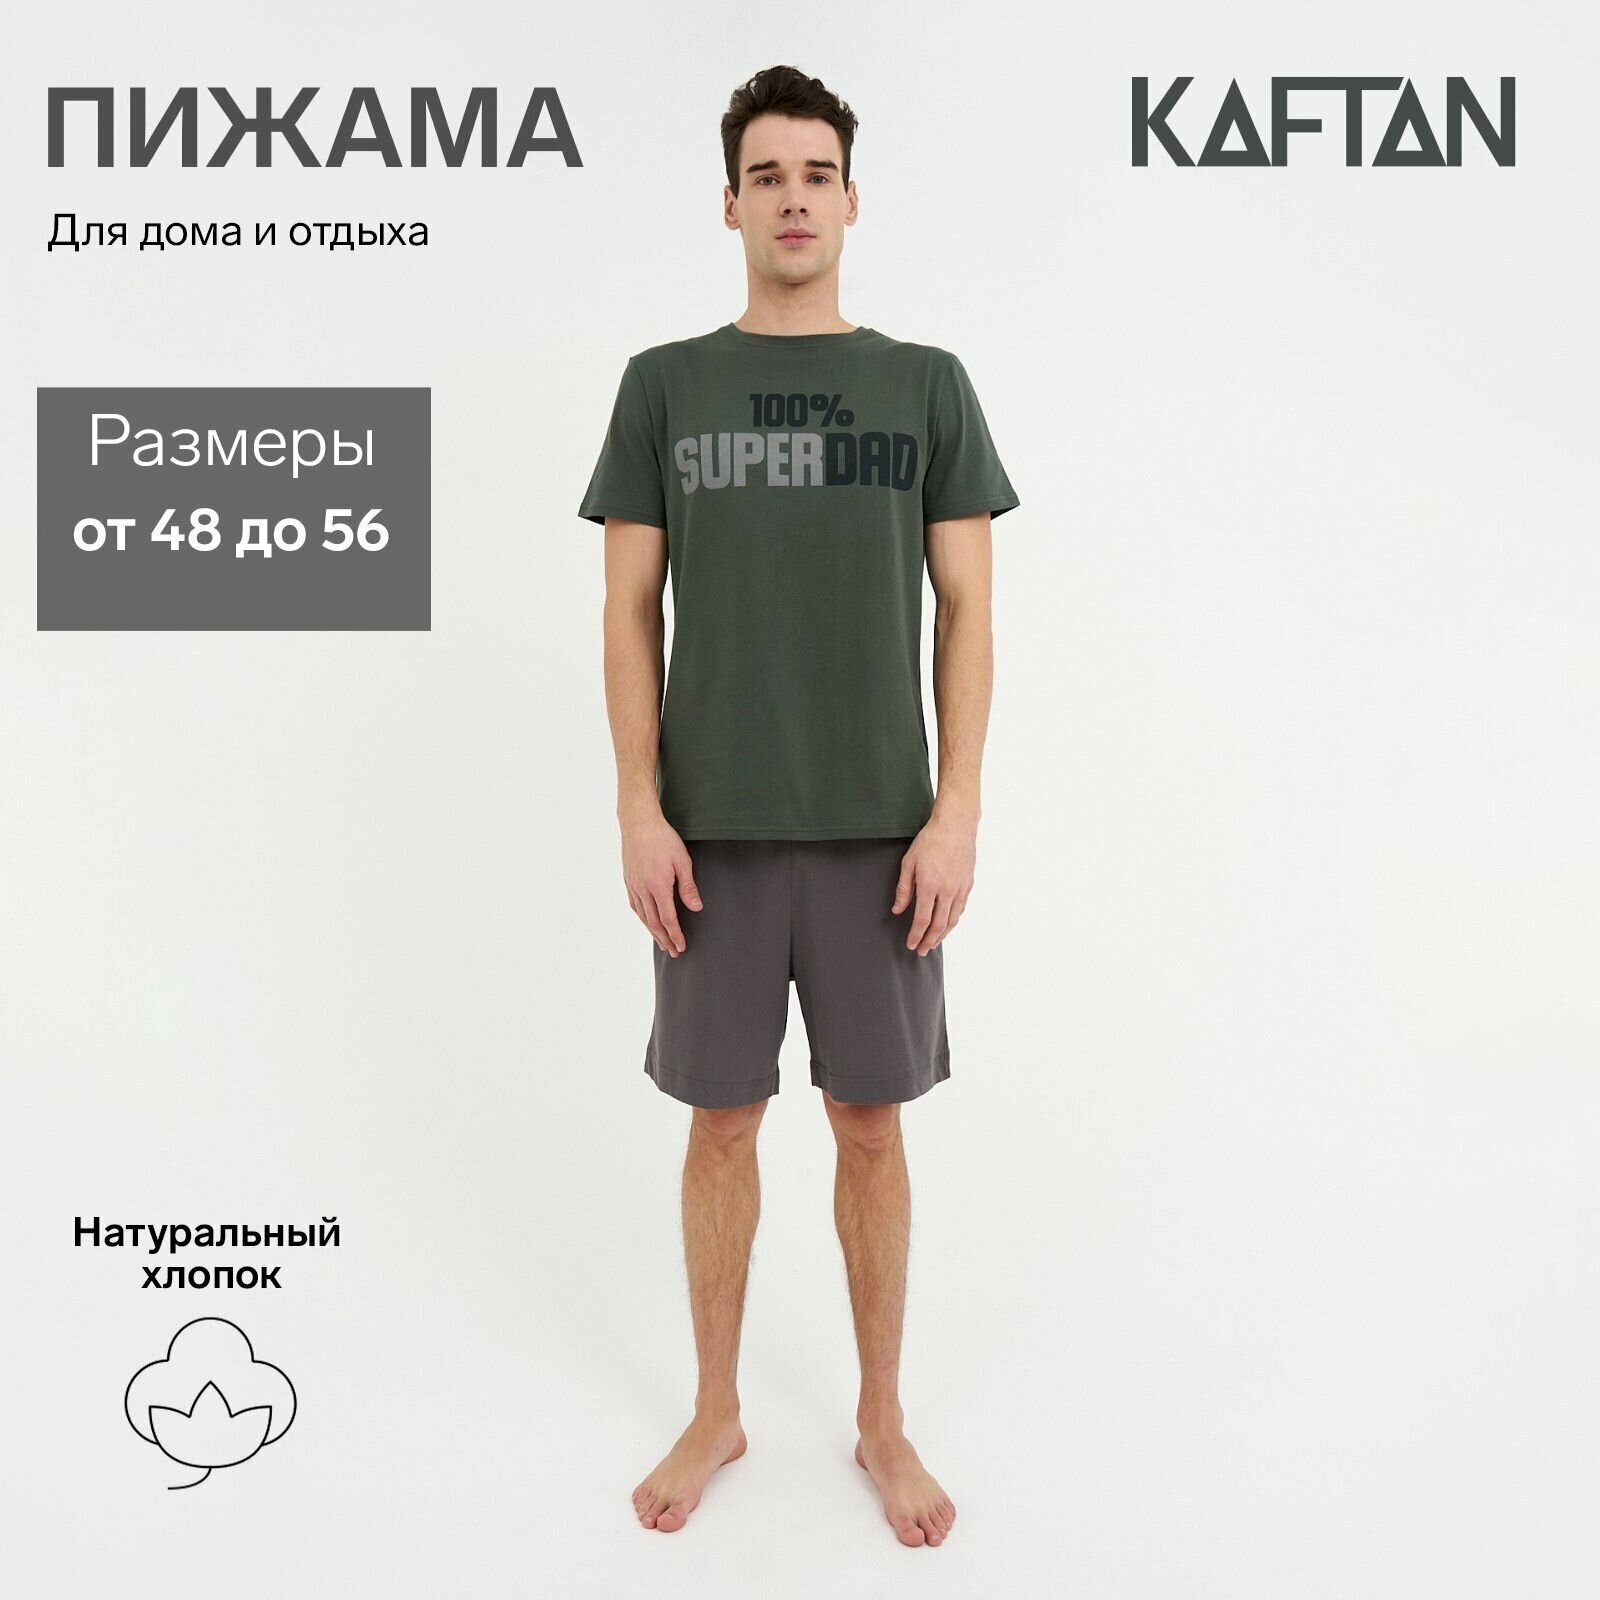 Пижама Kaftan, шорты, футболка, размер 52, зеленый - фотография № 1